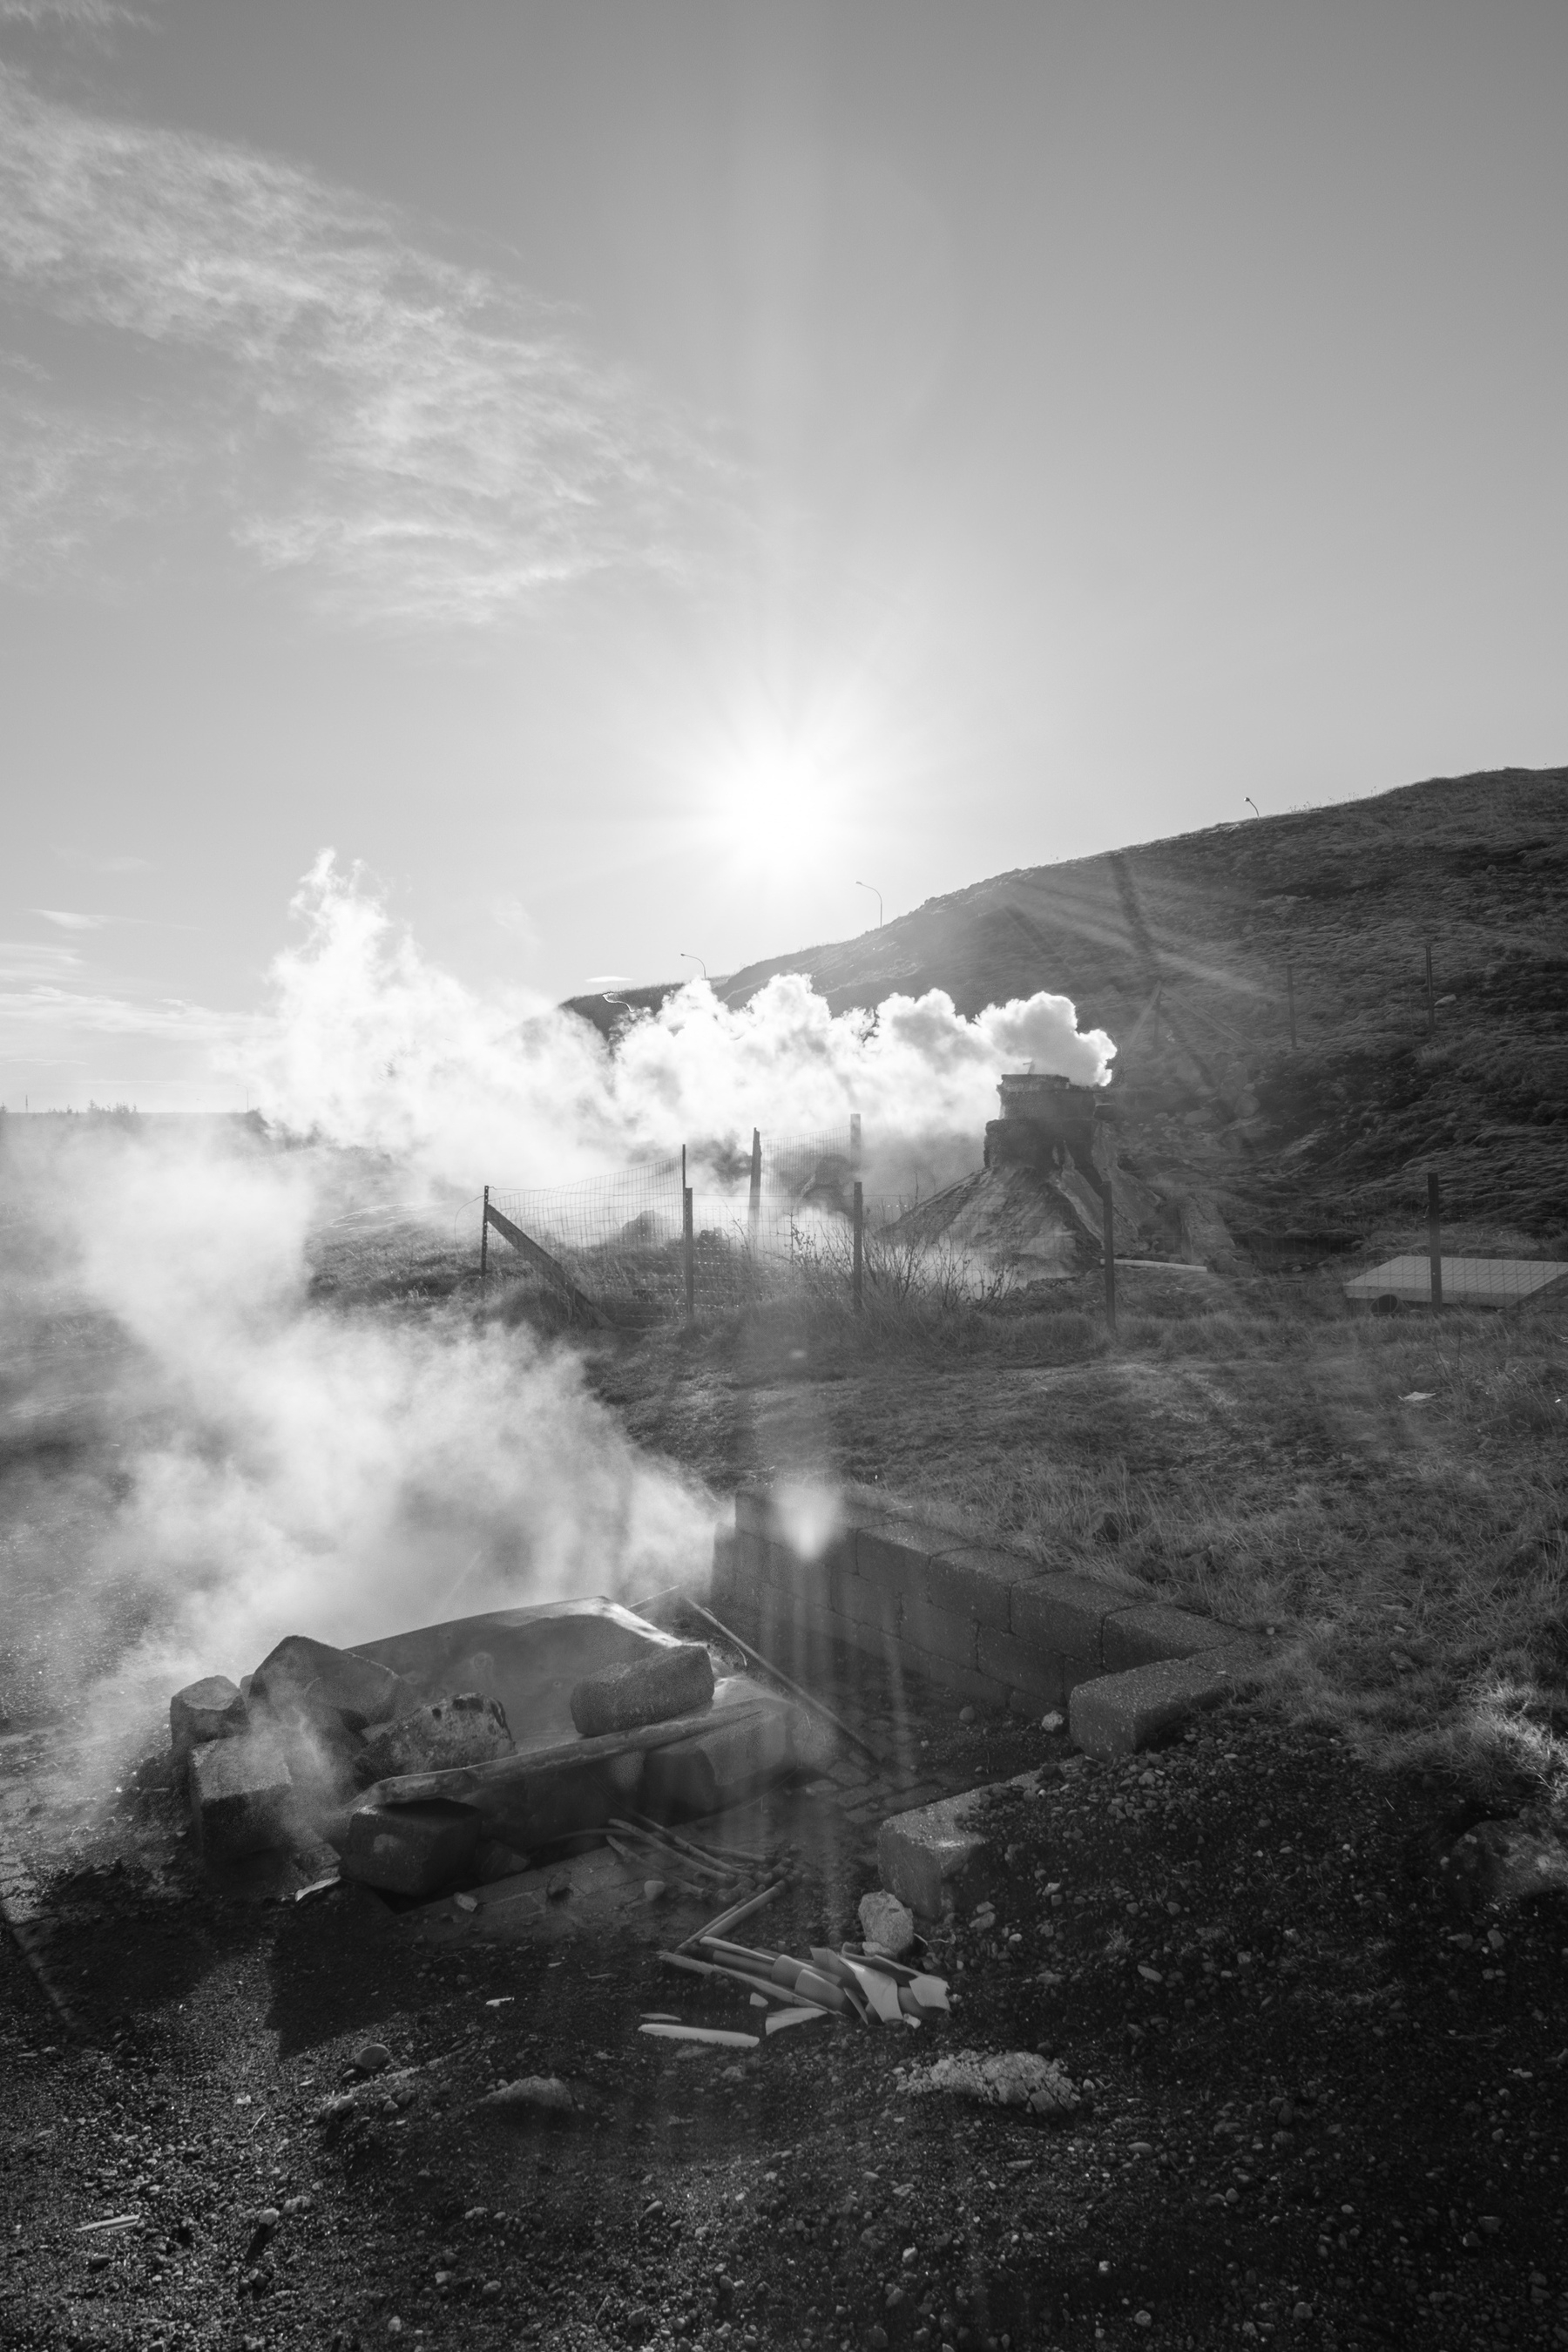 Geothermal activity here in Hveragerði